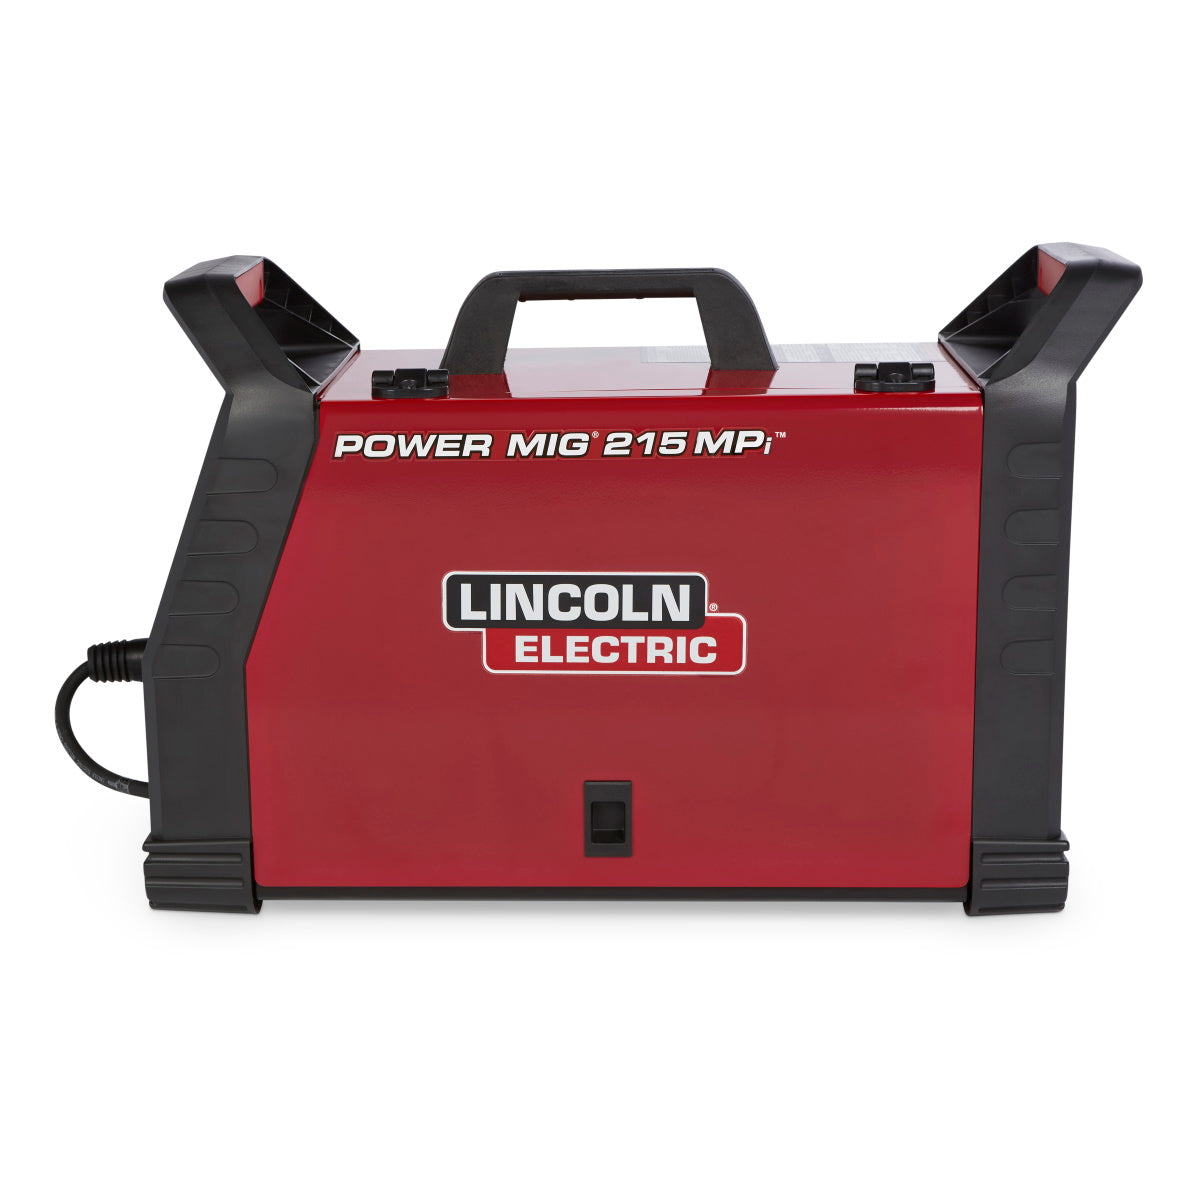 Lincoln Power MIG 215 MPi Multi-Process Welder (K4876-1)